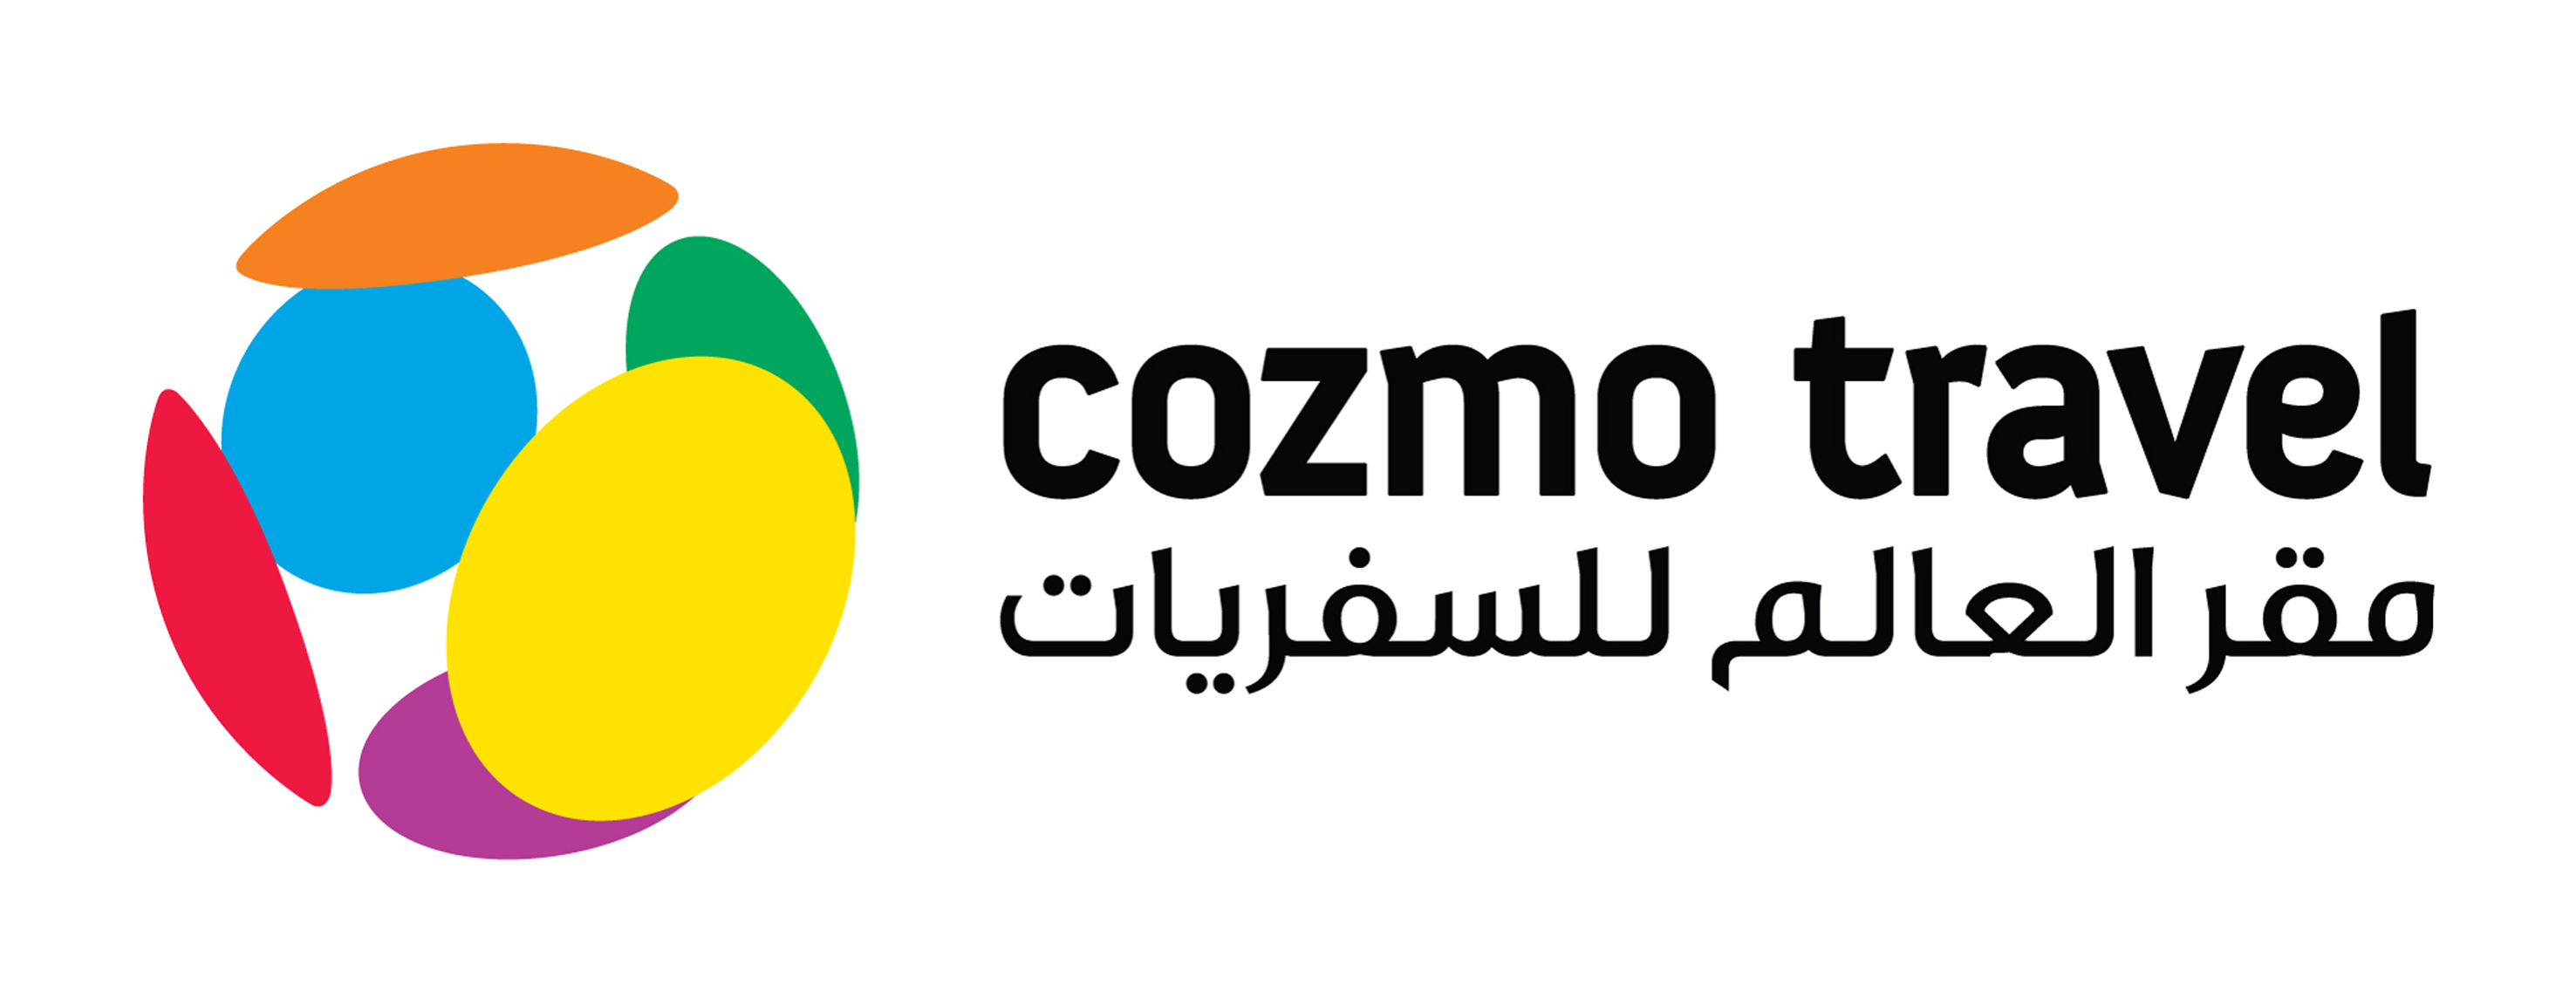 cozmo travel qatar ticket price